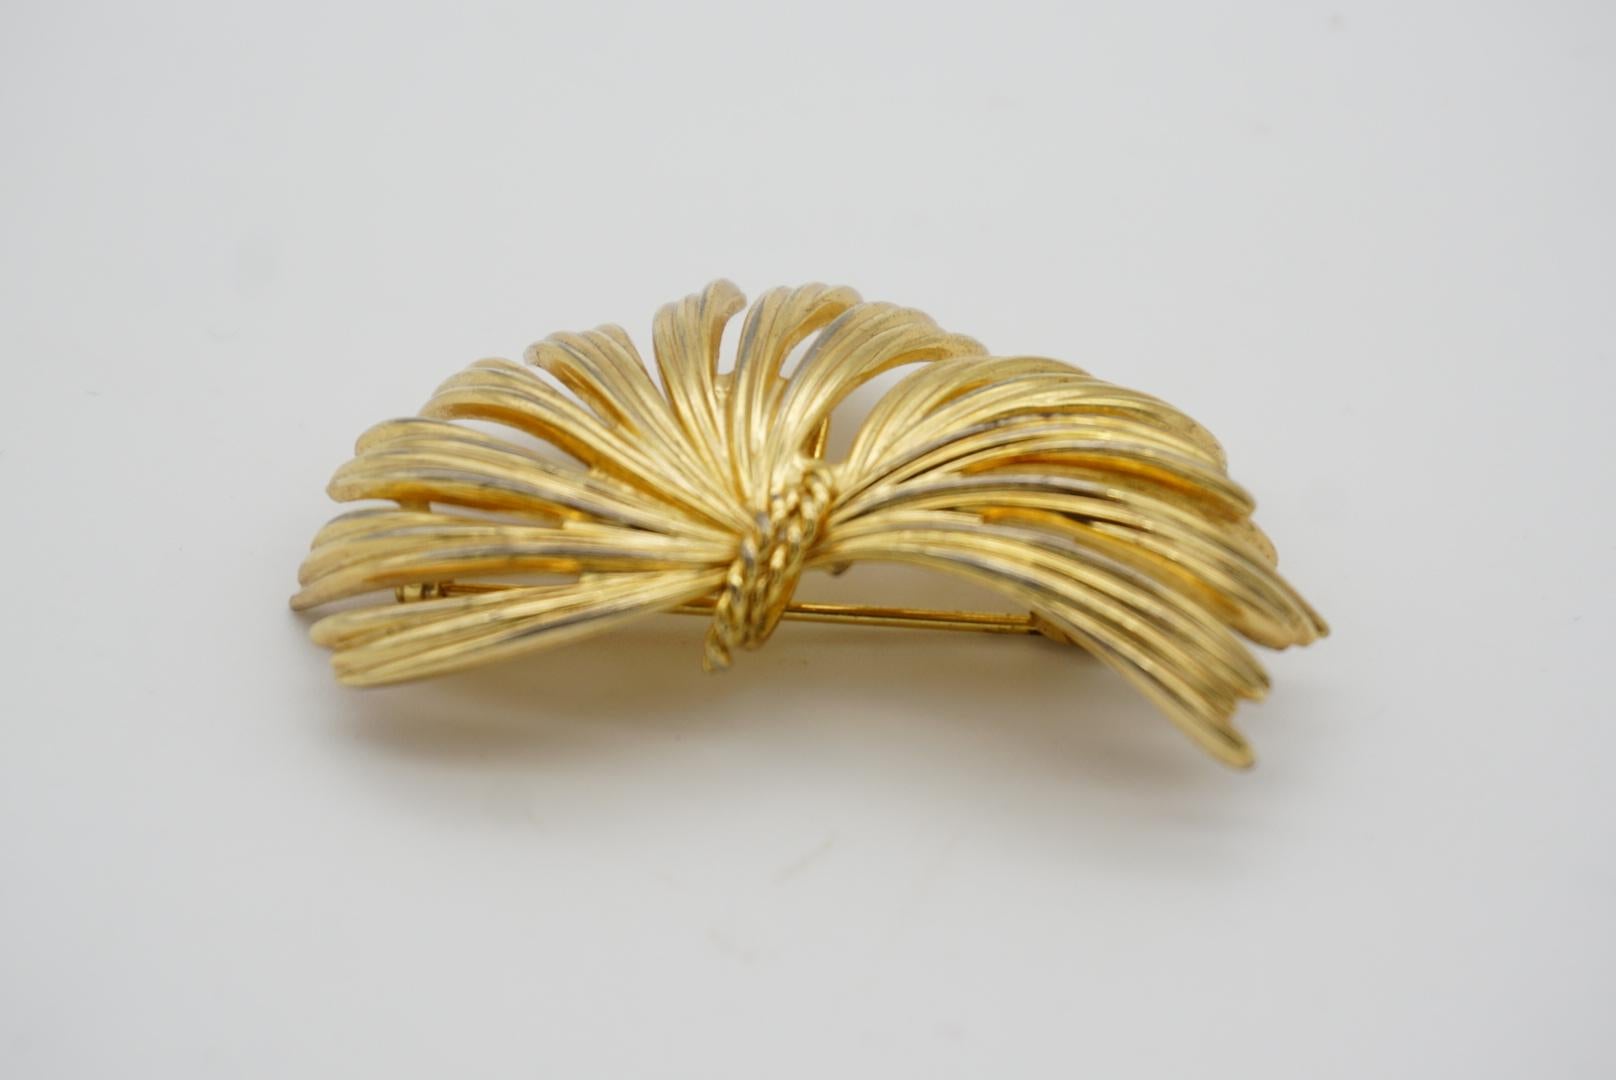 Christian Dior GROSSE 1964 Vintage Flourish Tassel Spray Gold Brooch Pendant For Sale 4